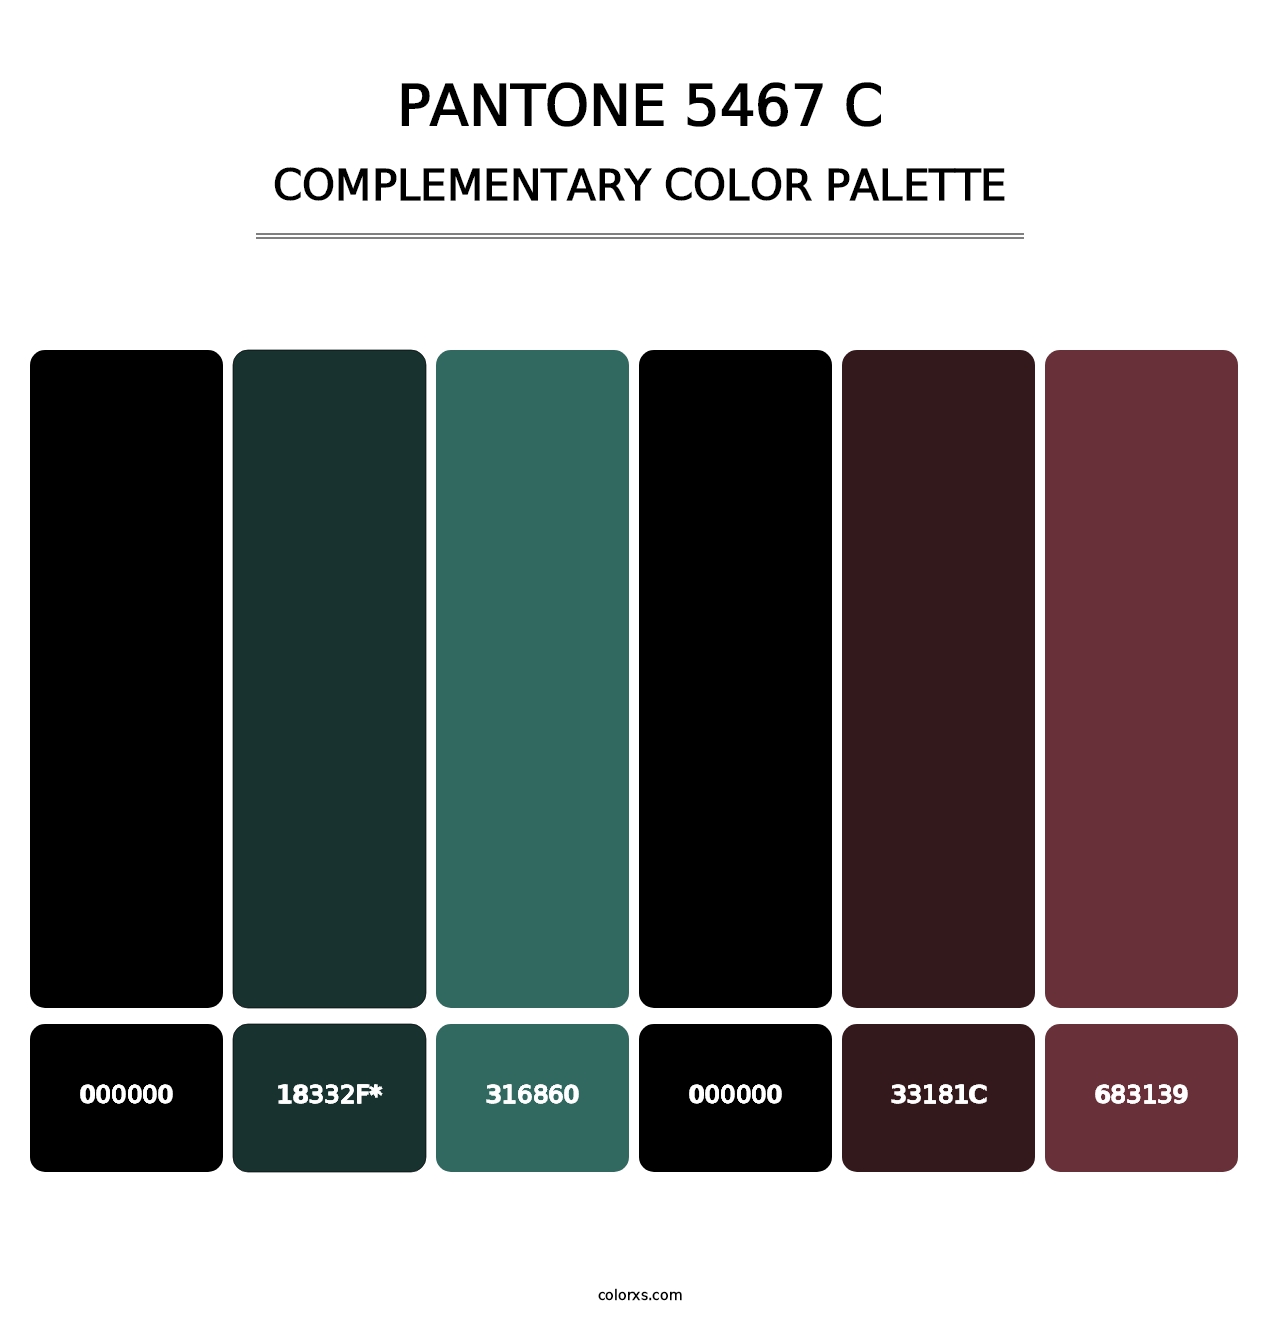 PANTONE 5467 C - Complementary Color Palette